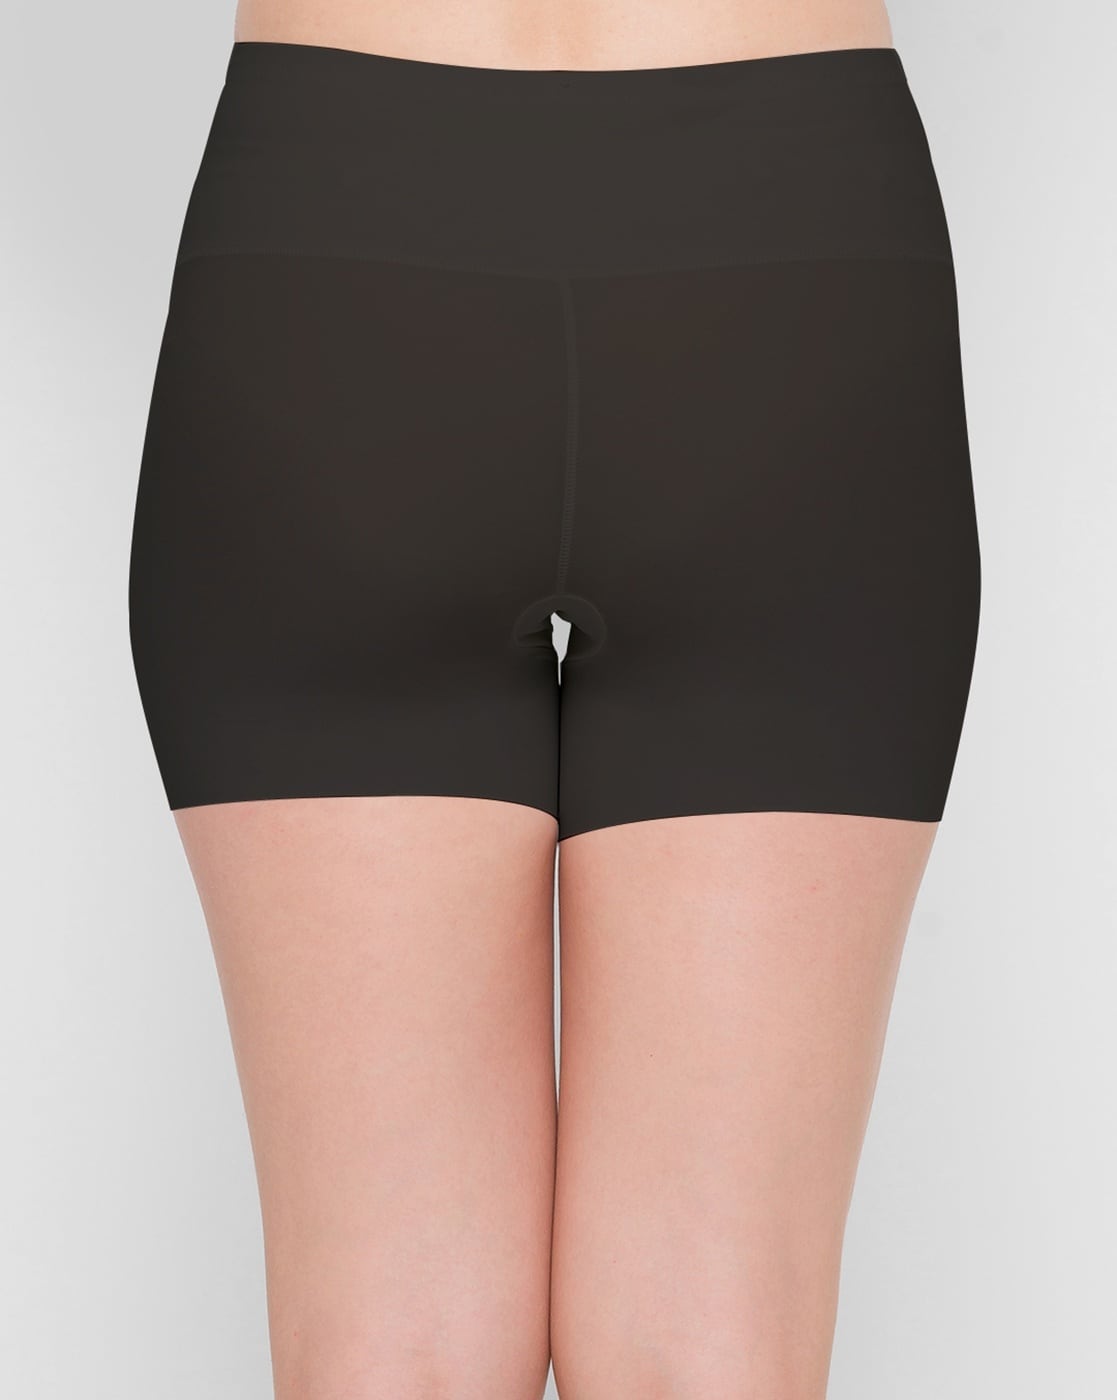 Buy Black Panties for Women by Fashionrack Online